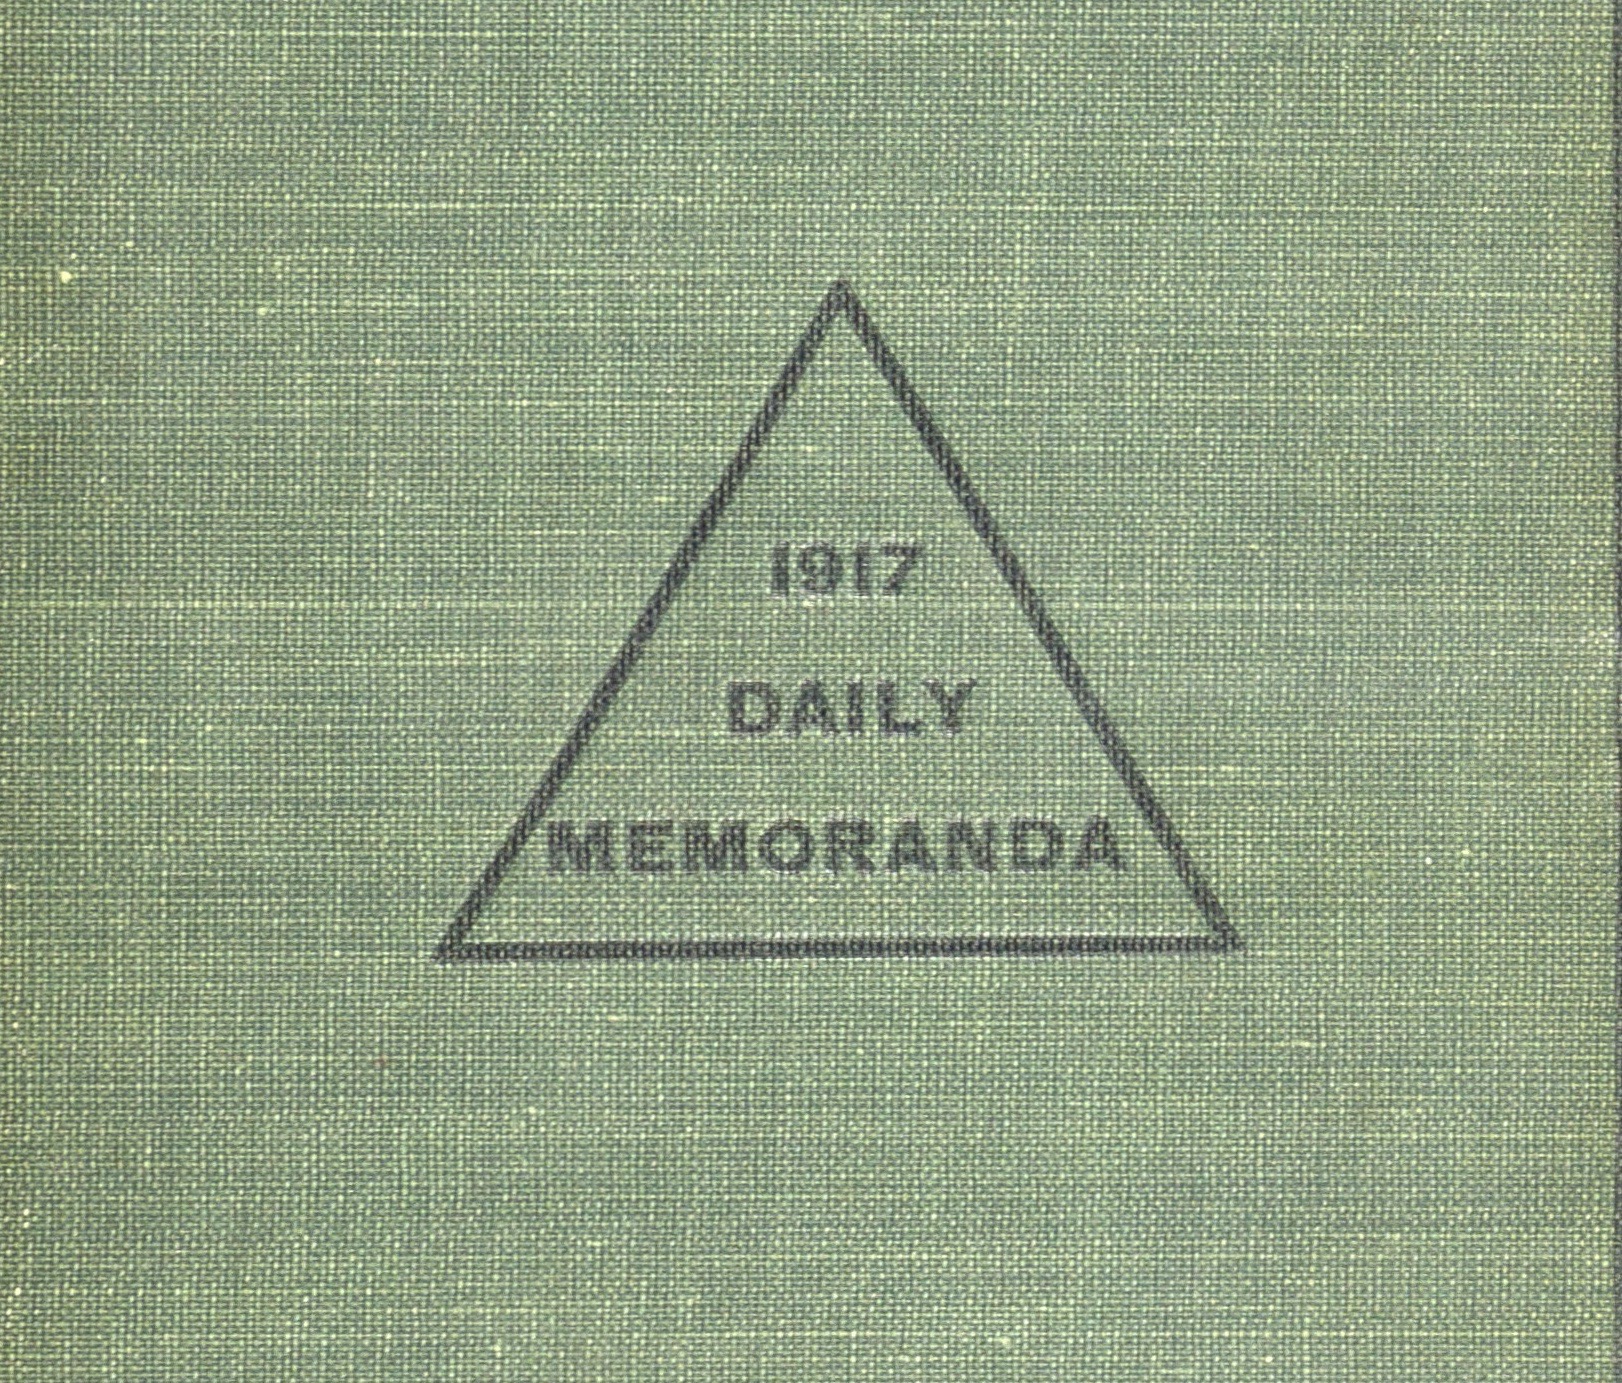 Encoding the Thomas D. Craven Diary